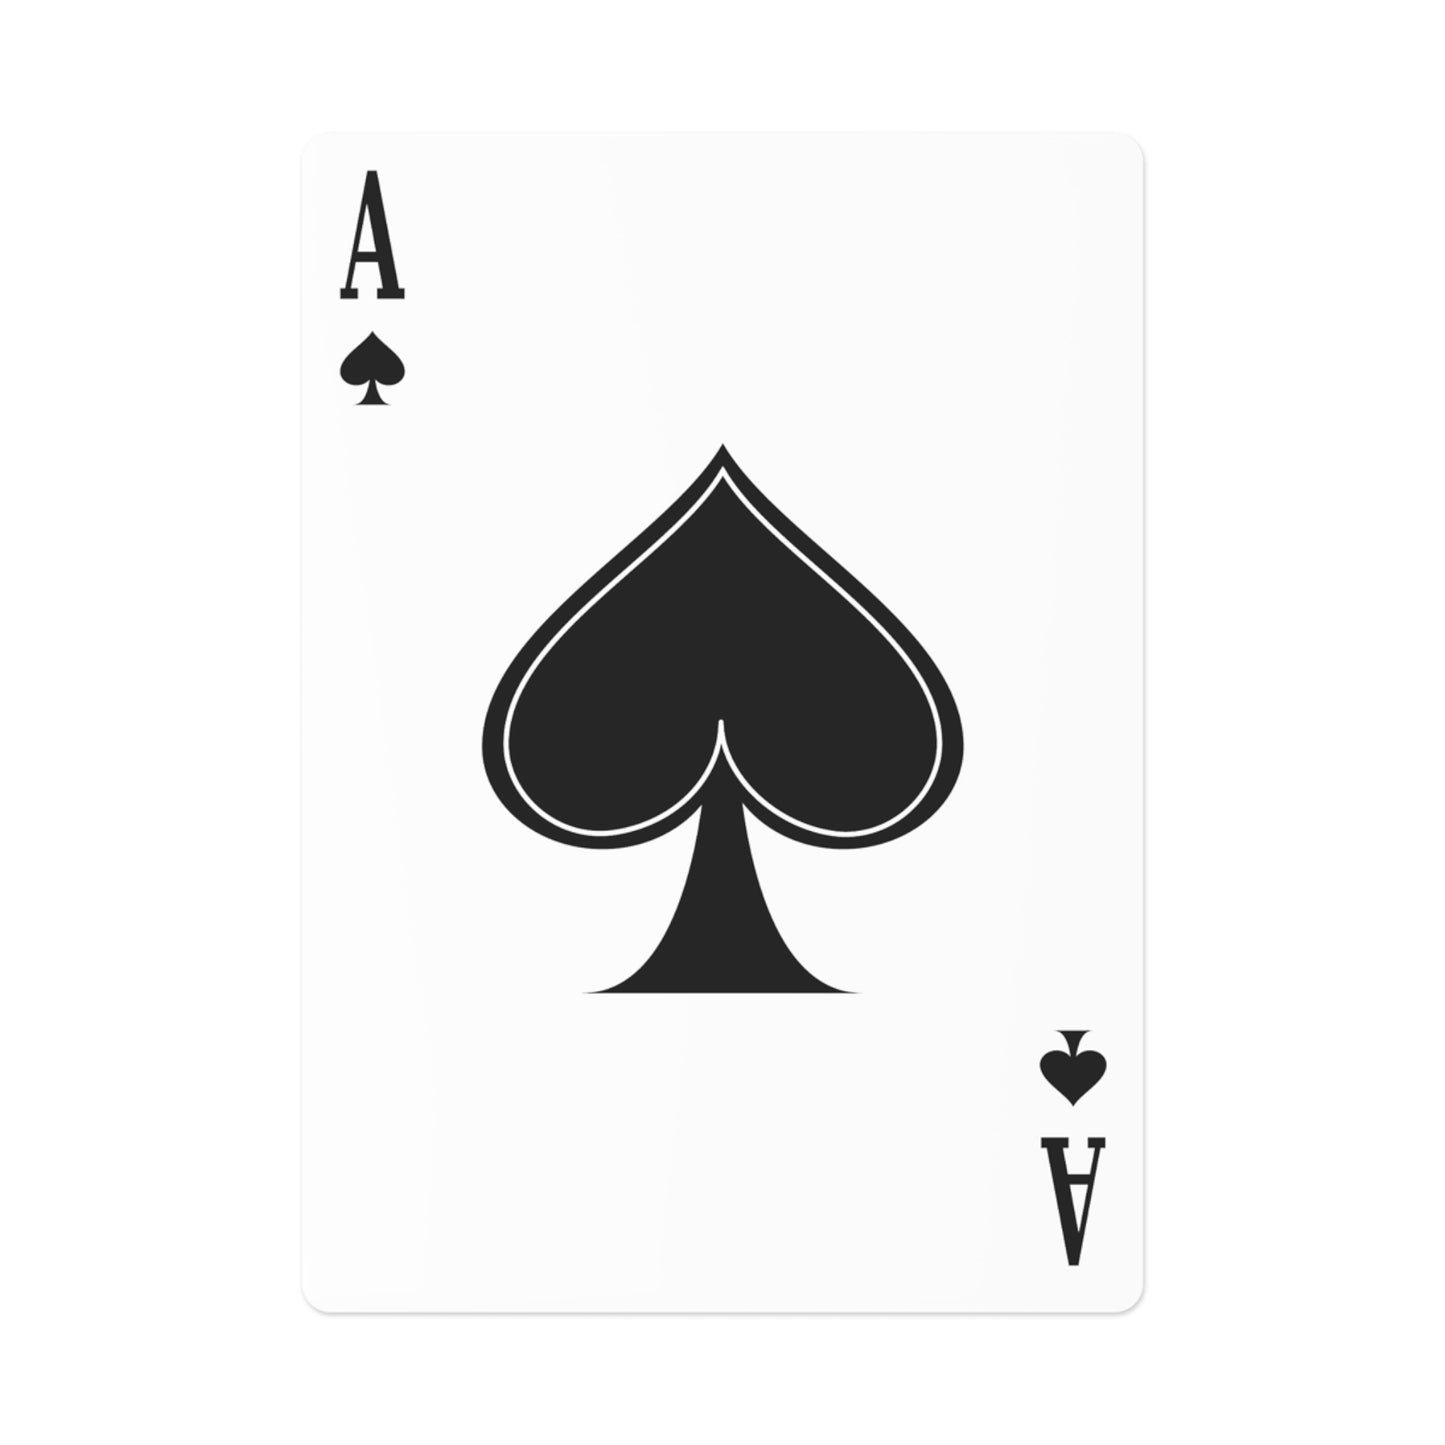 AdTechGod Poker Cards